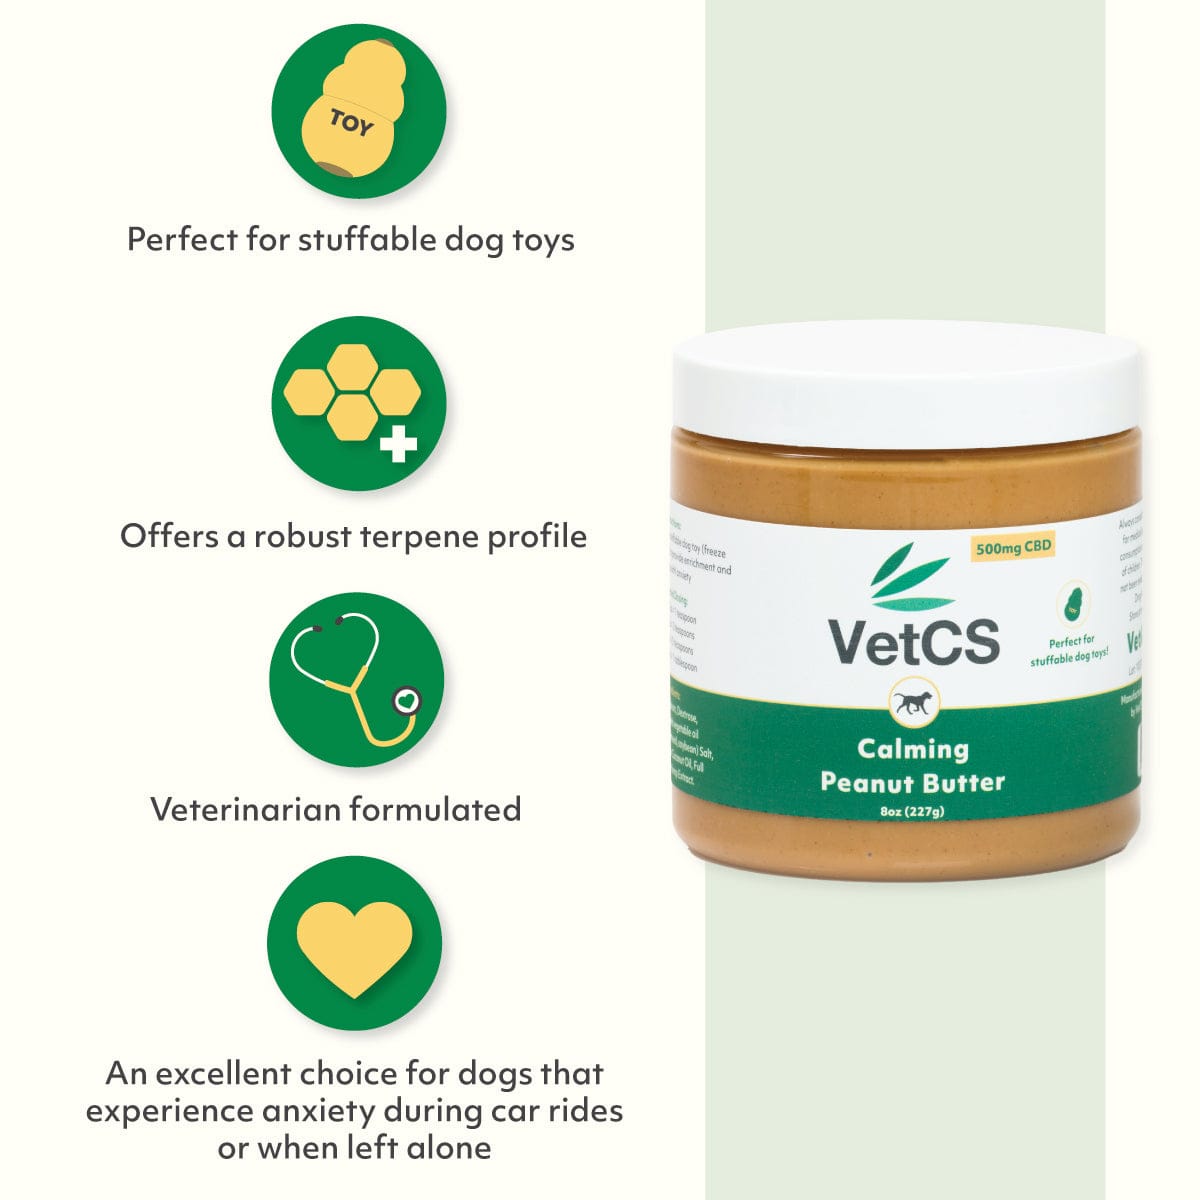 VetCS 500mg cbd peanut butter for dogs benefits 